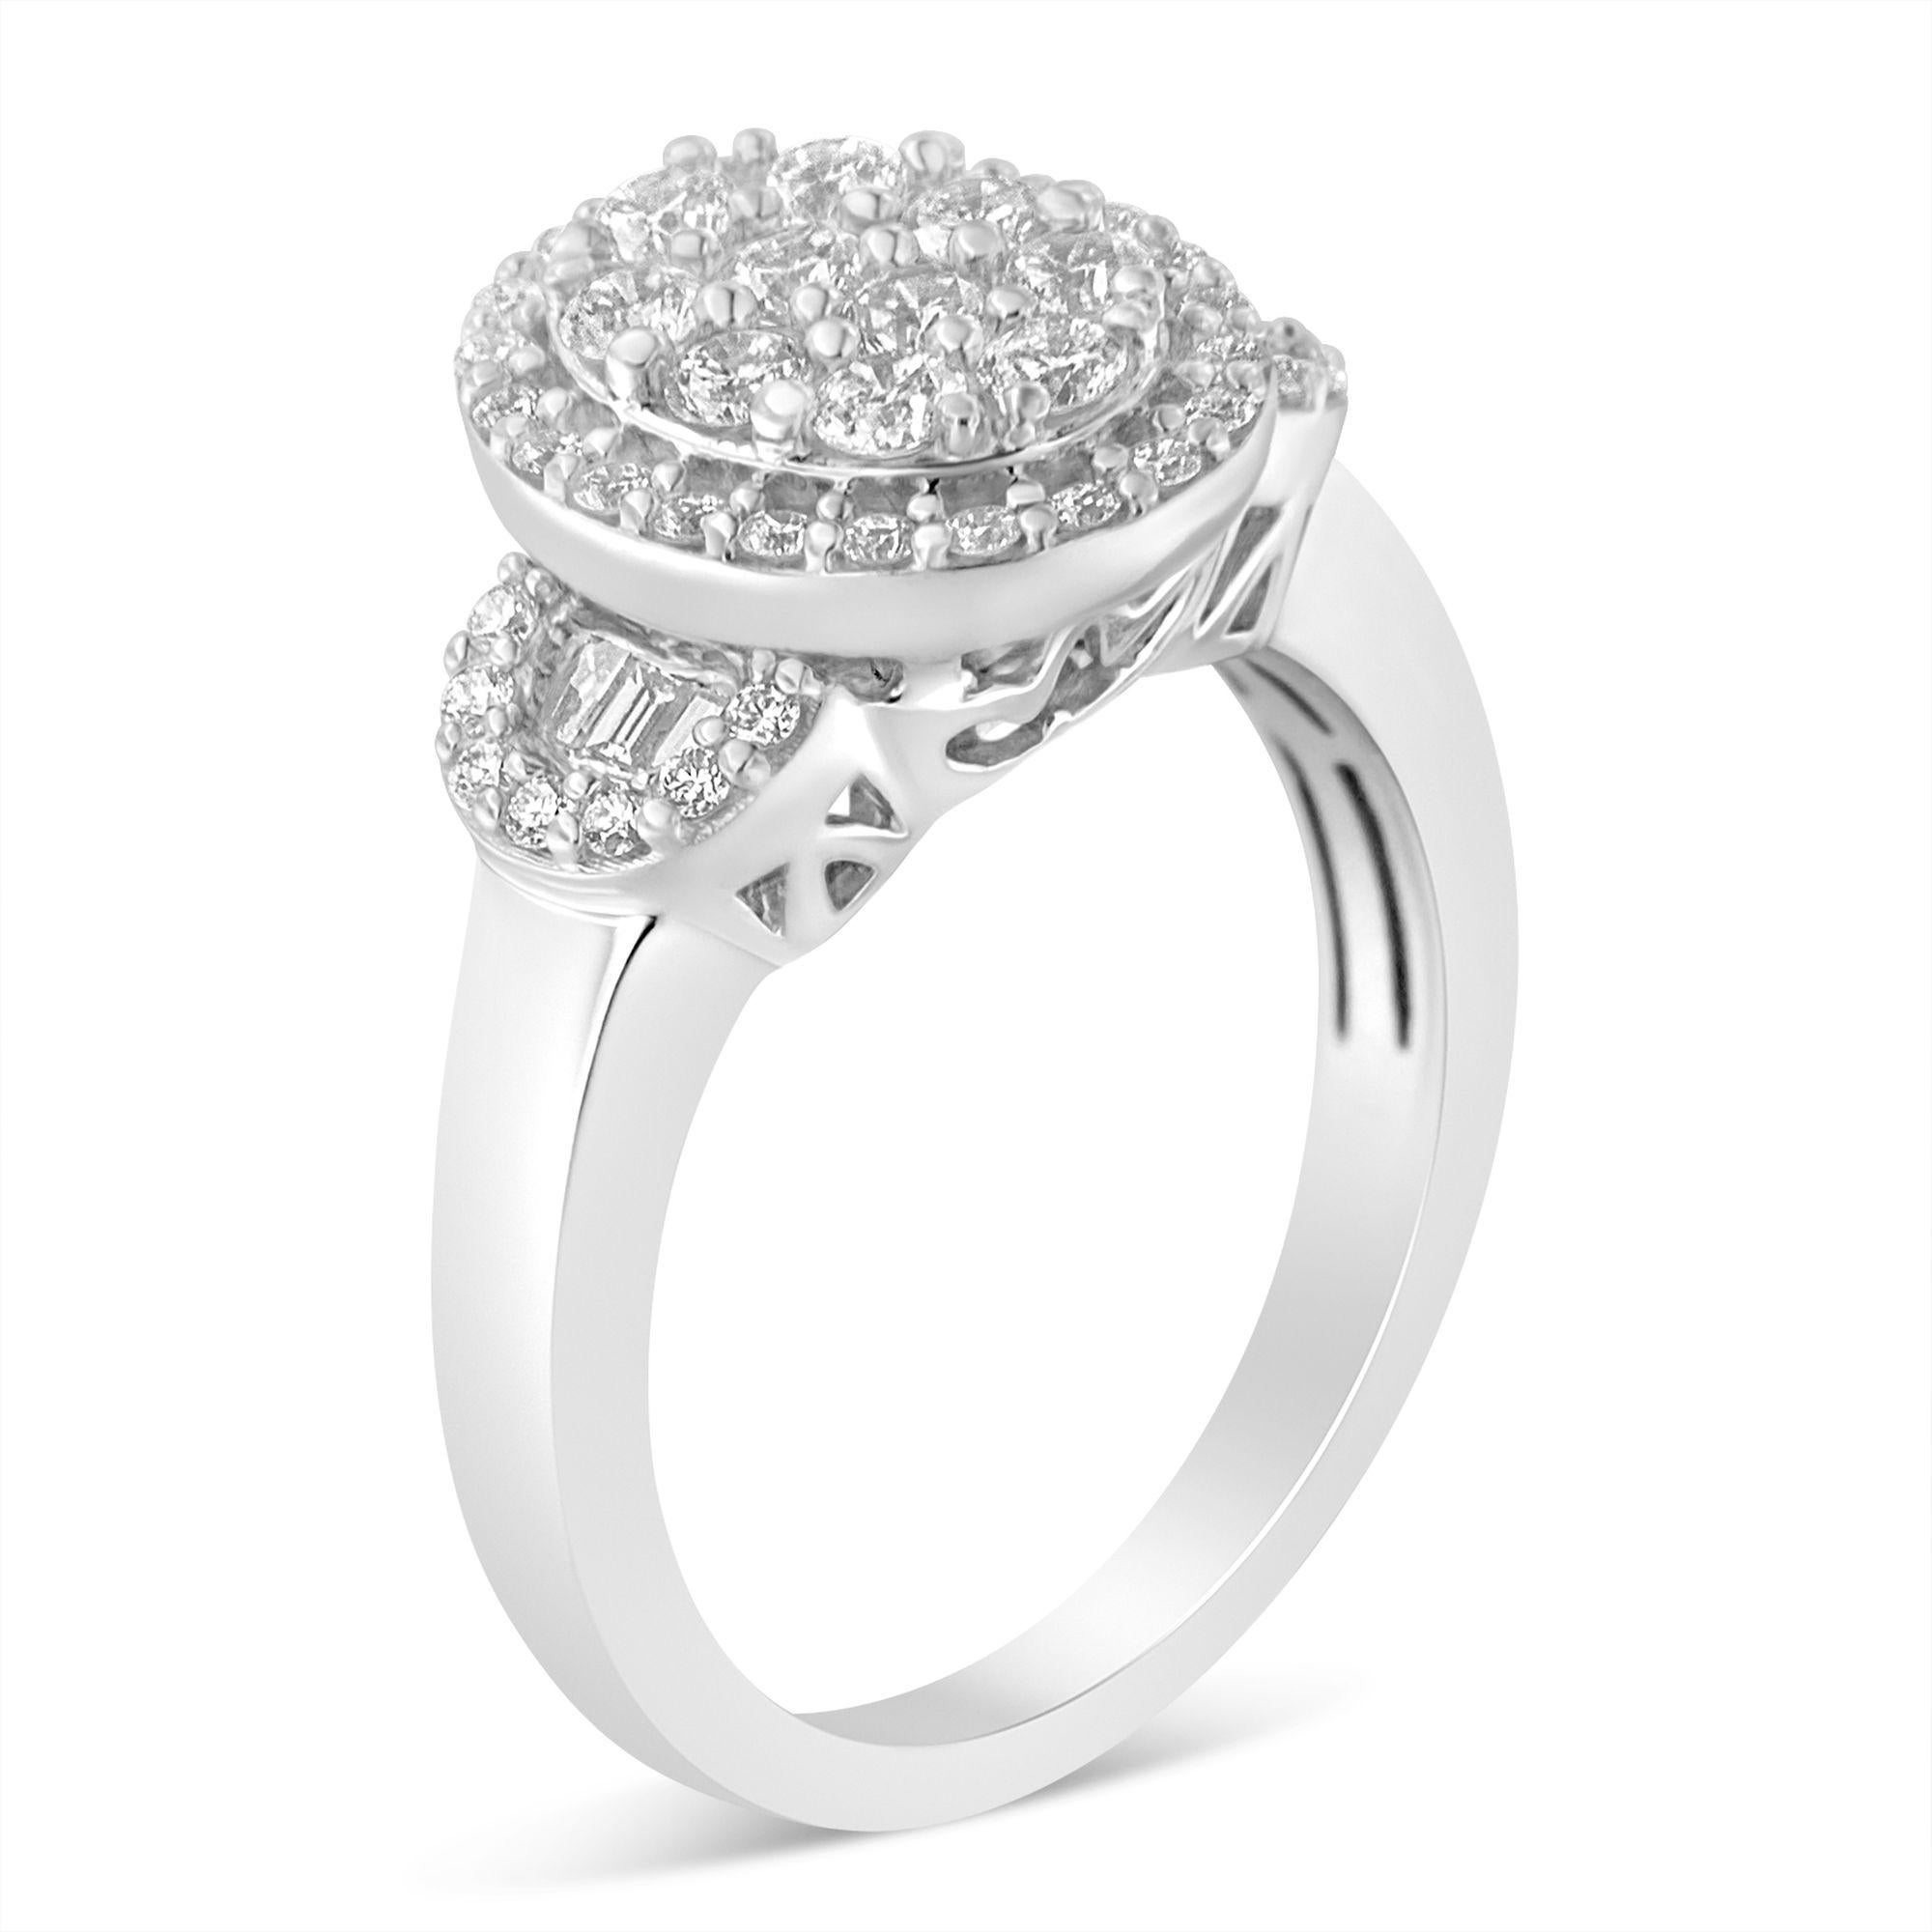 For Sale:  10K White Gold 1.0 Carat Diamond Cluster Ring 4